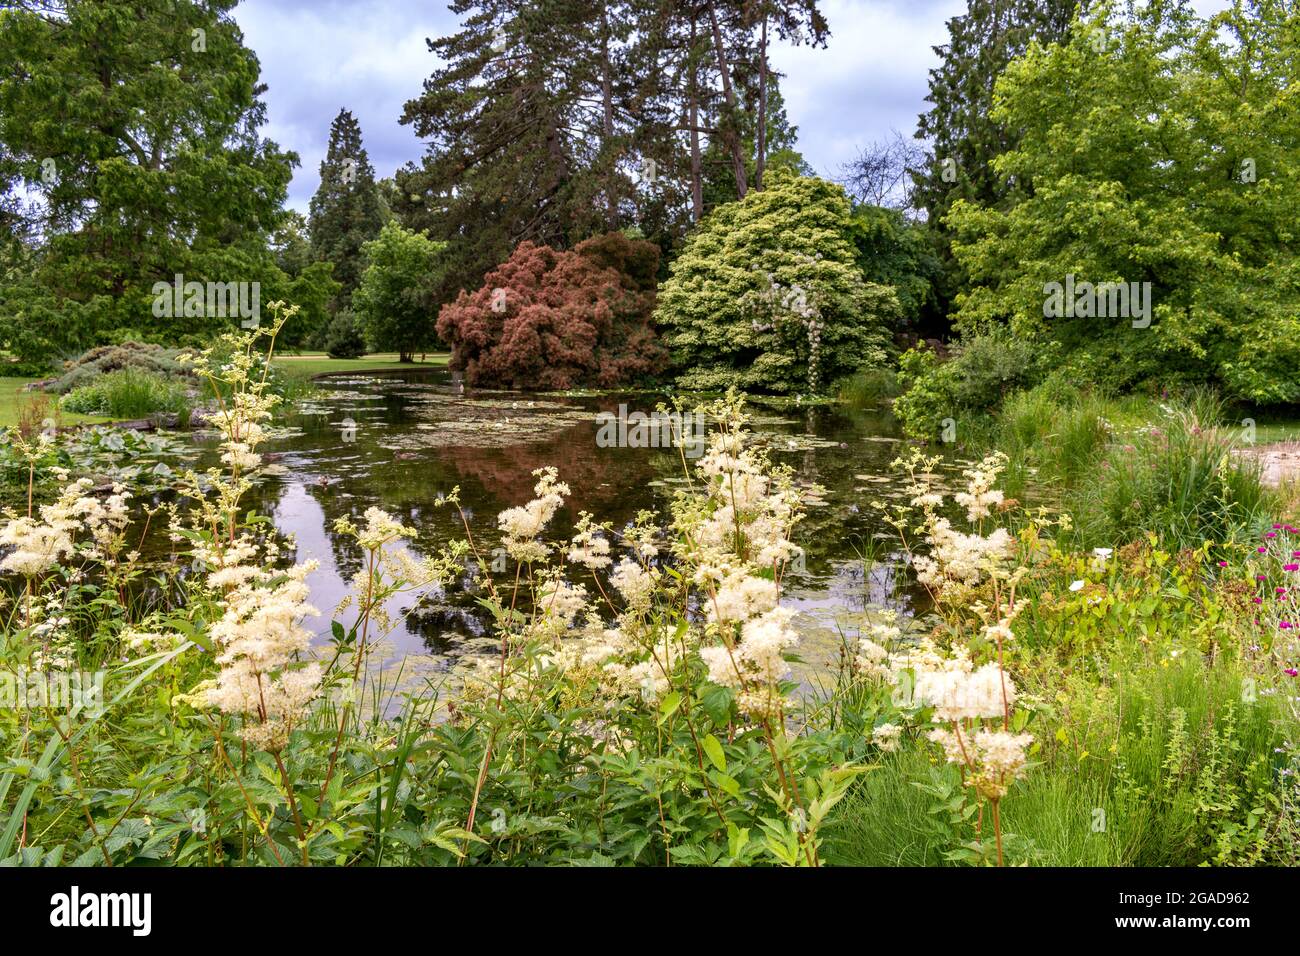 CAMBRIDGE ENGLAND UNIVERSITY BOTANIC GARDENS THE LAKE AND SURROUNDING TREES AND FLOWERS IN SUMMER Stock Photo